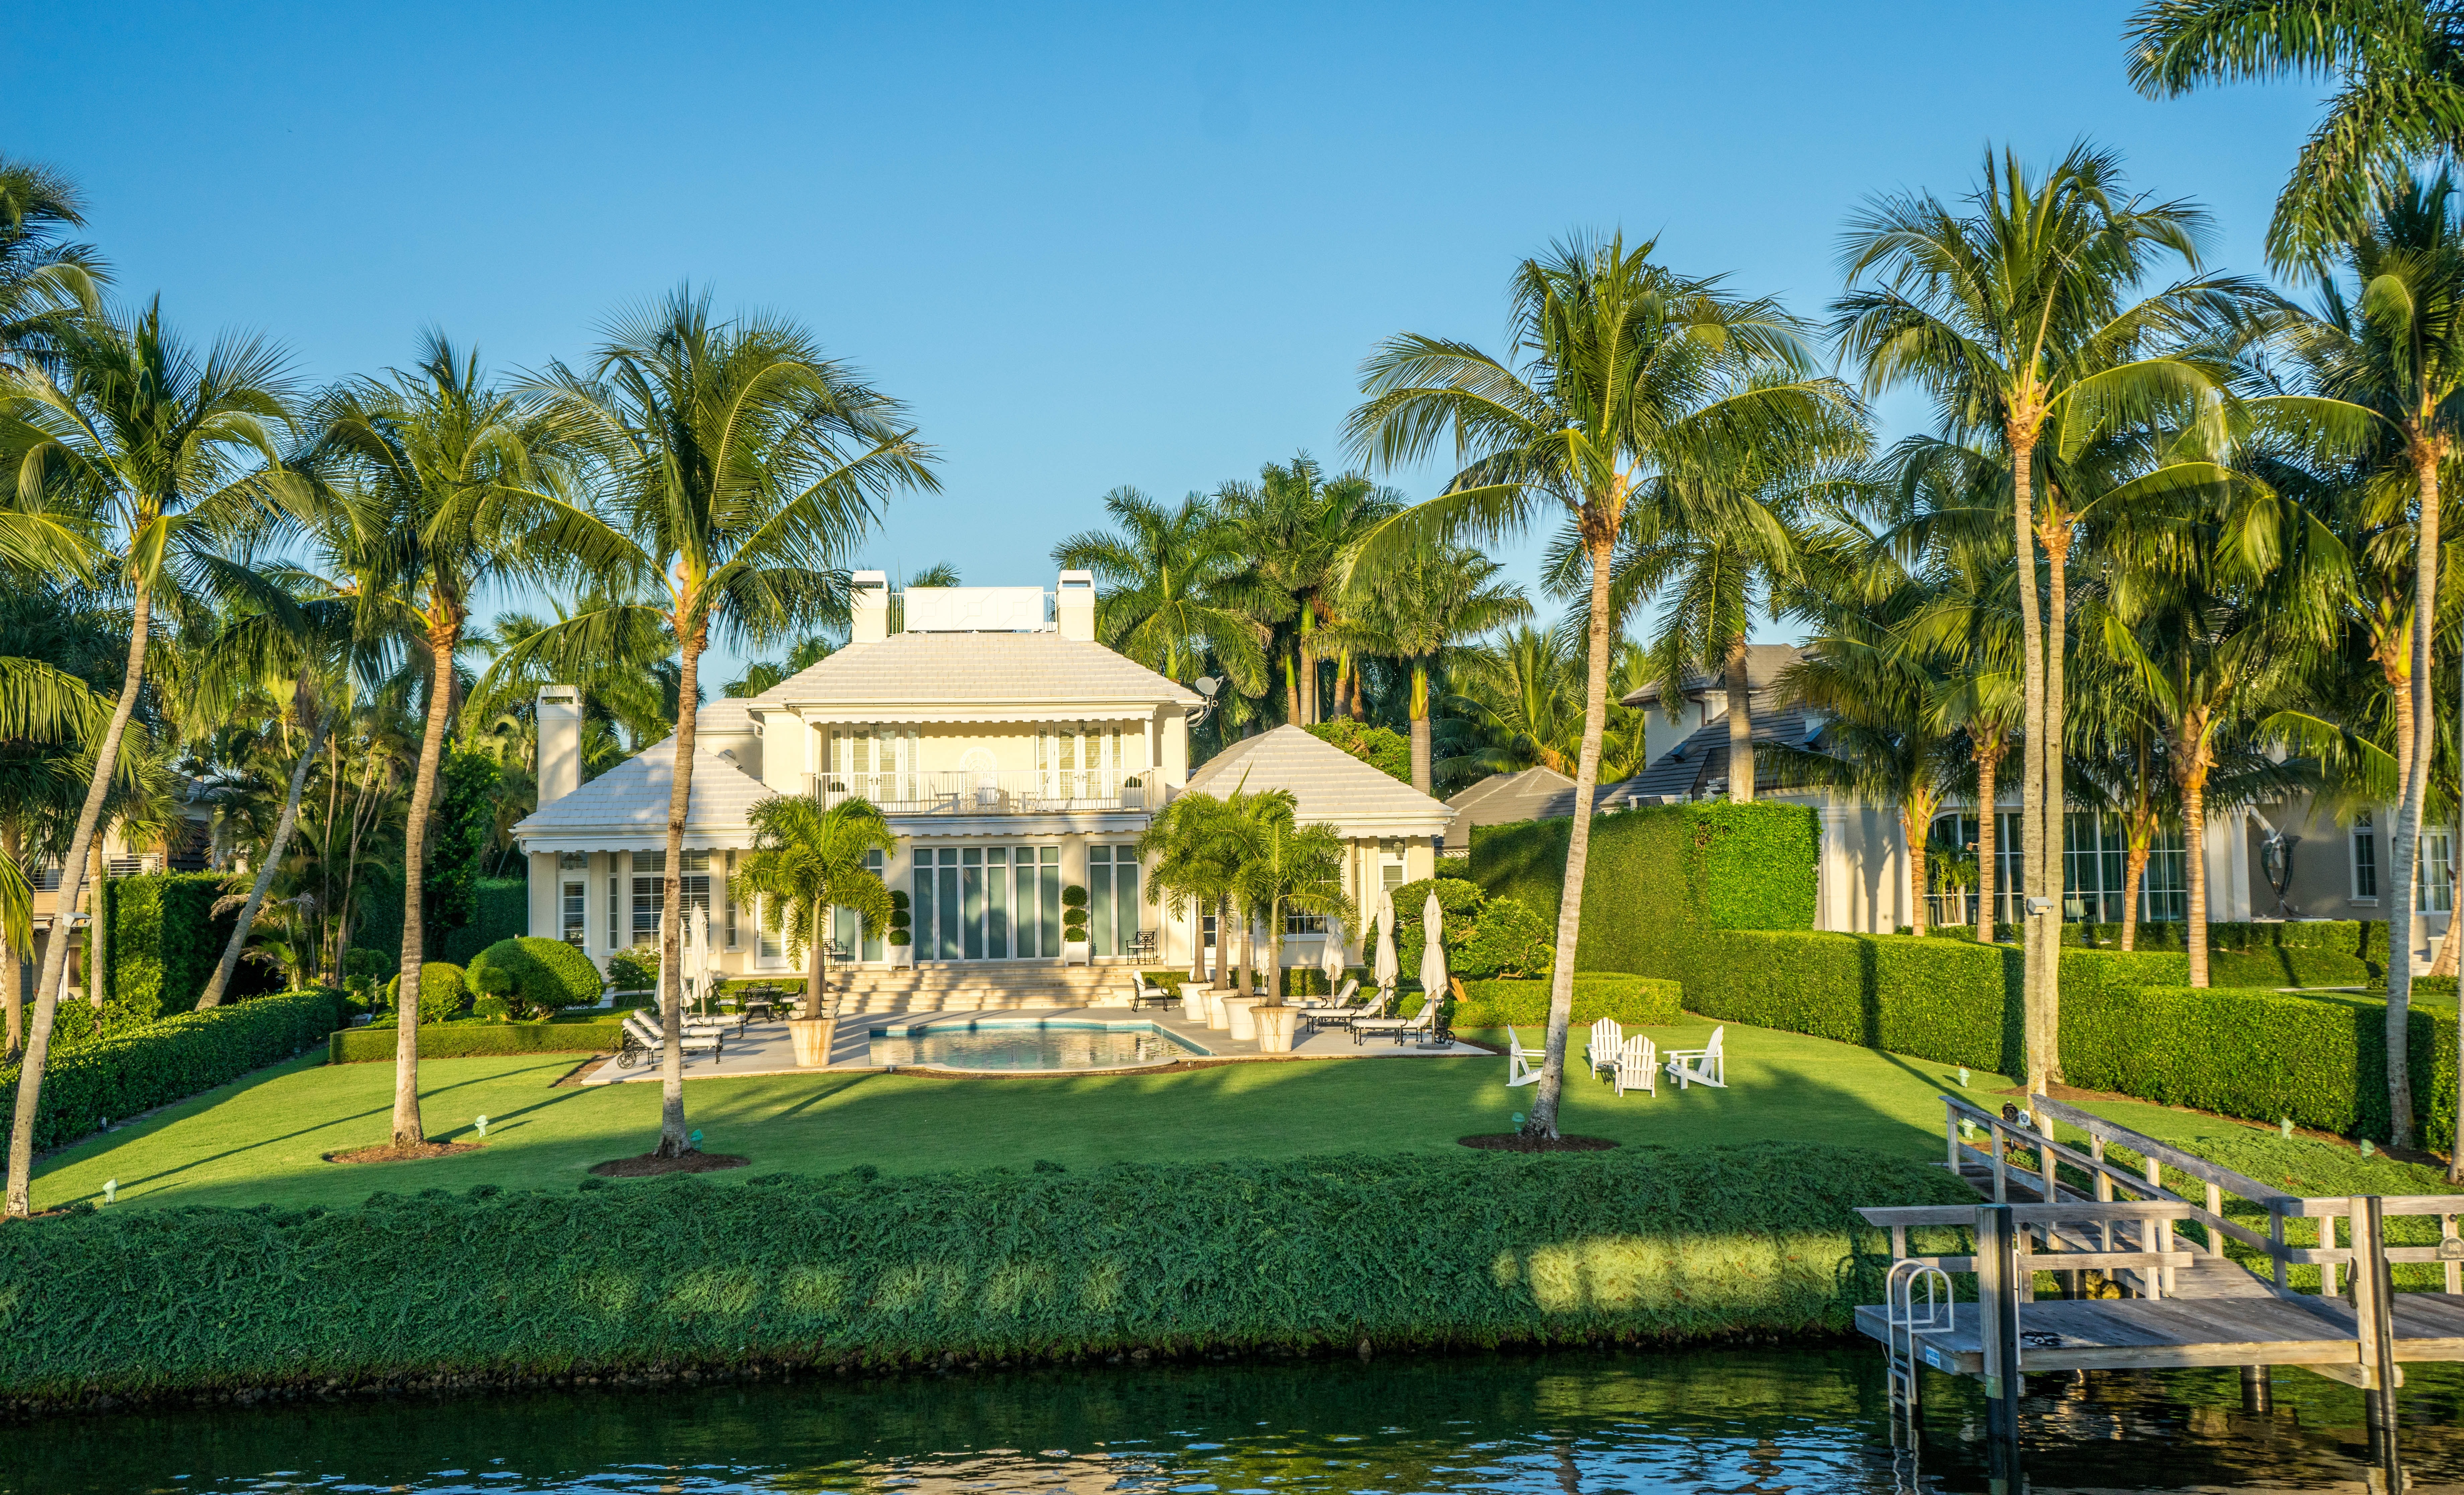 Dock Water, Naples, Florida, Coastline, palm tree, house